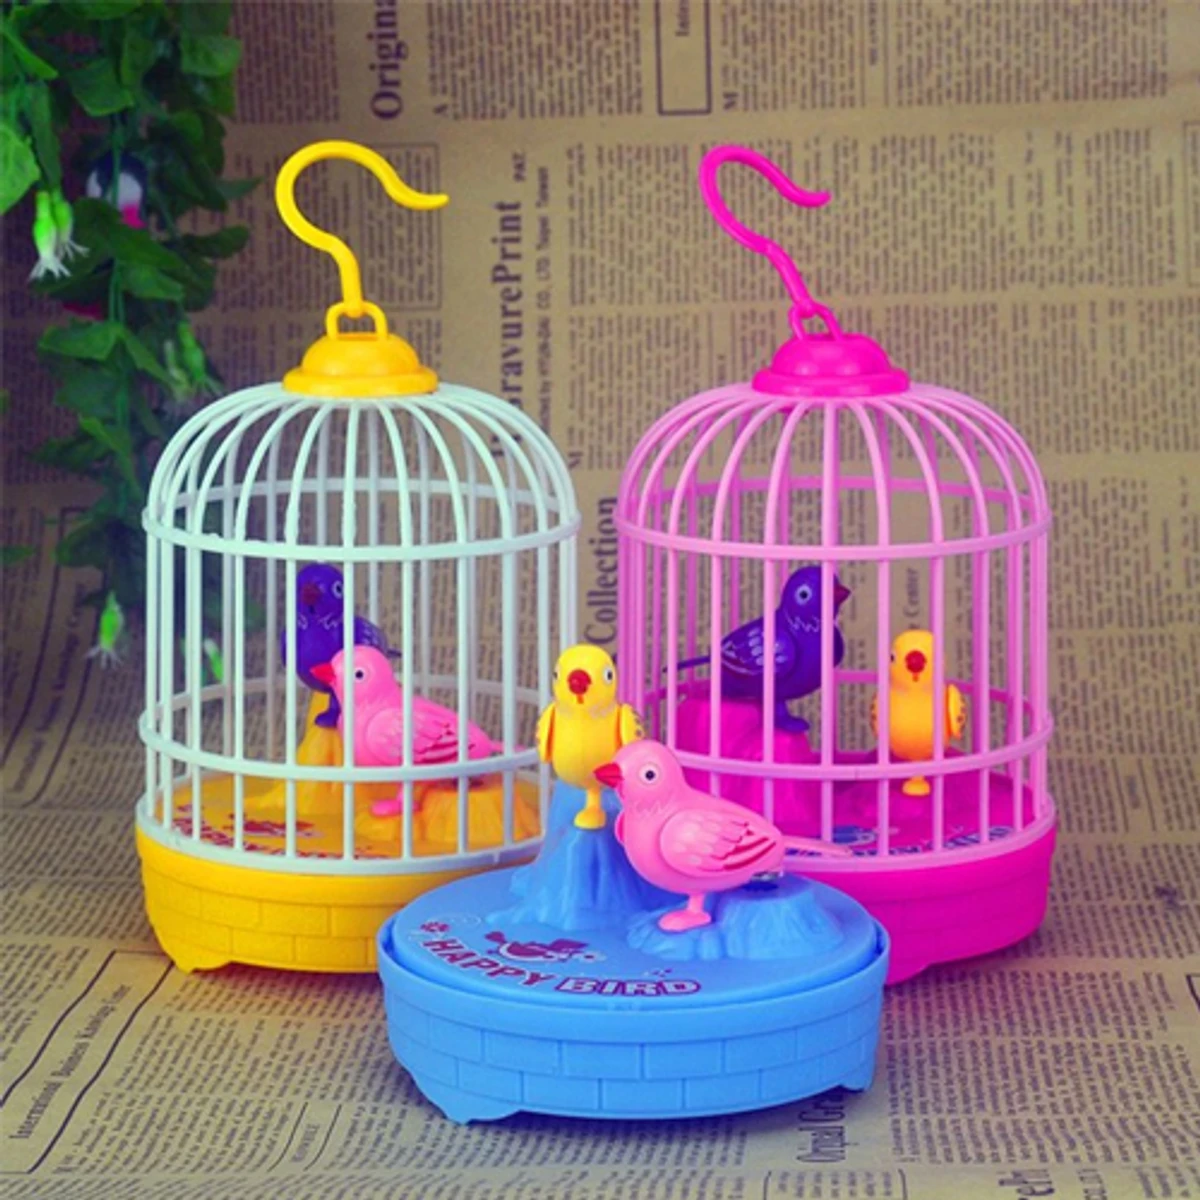 Talking Birds Cute Mini Bird Cages Voice Sensing Dual Bird Plastic Electronic Bird Toys